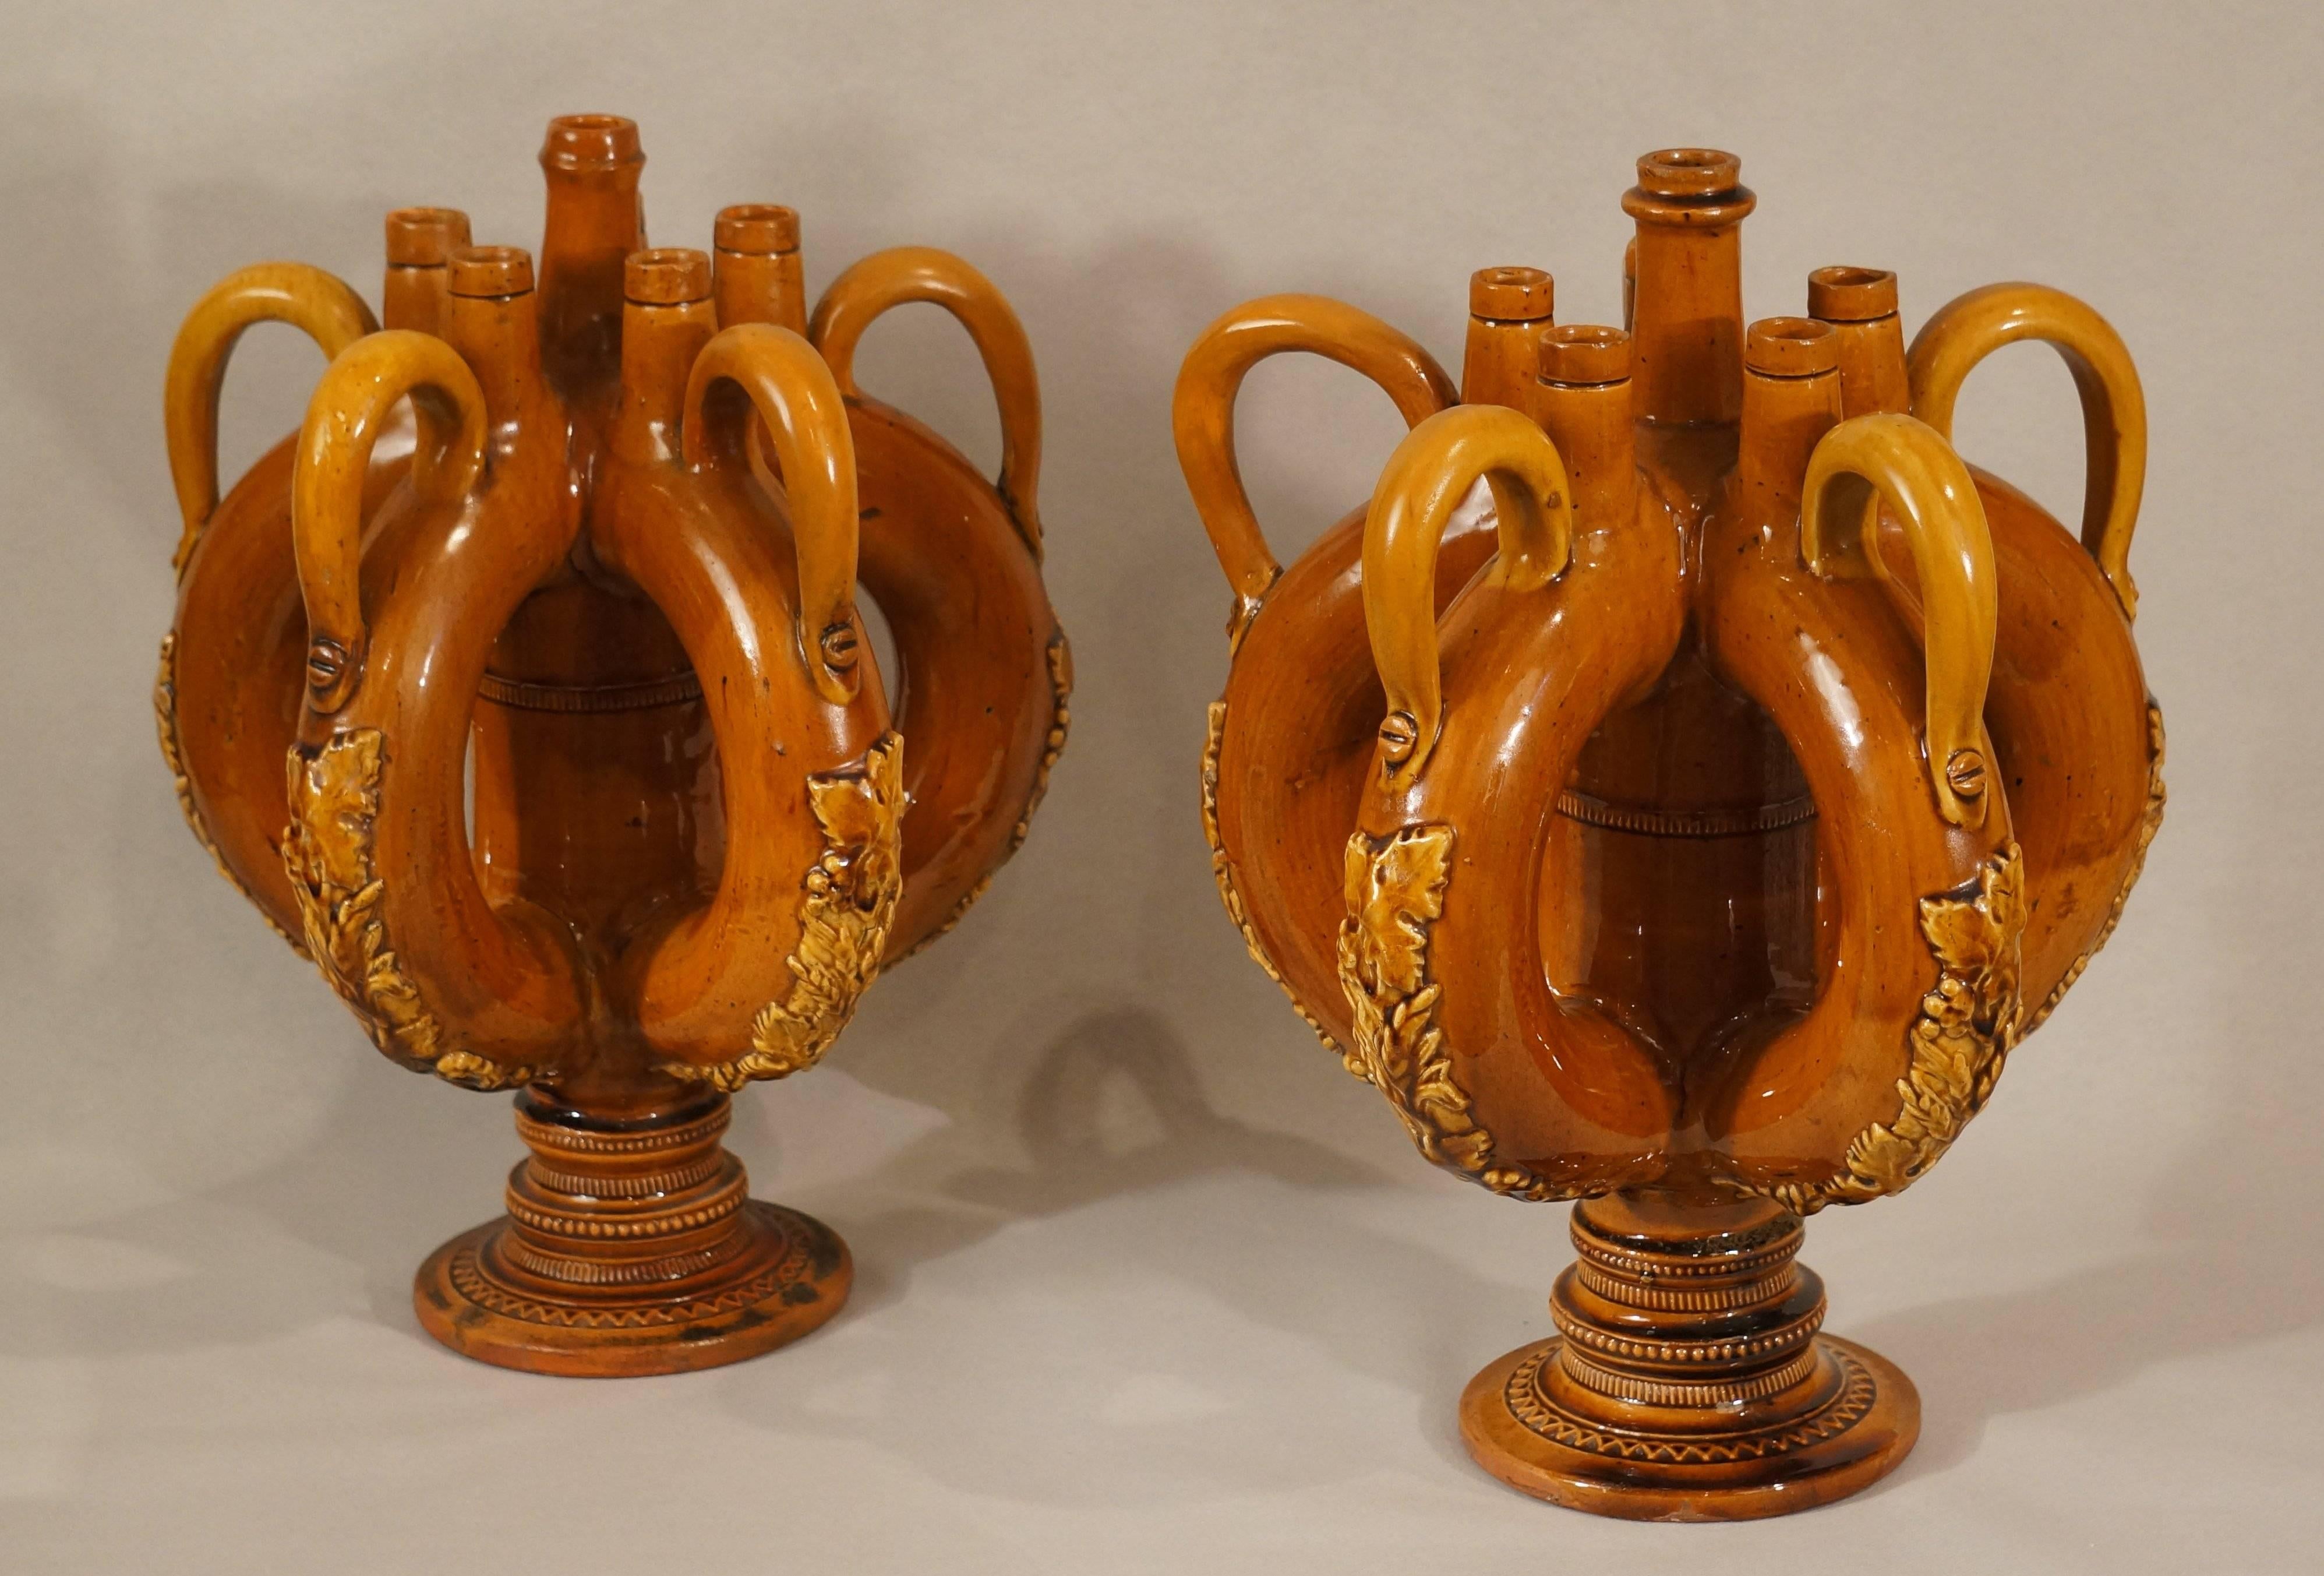 Pair of Provençal Vase - Art by Unknown